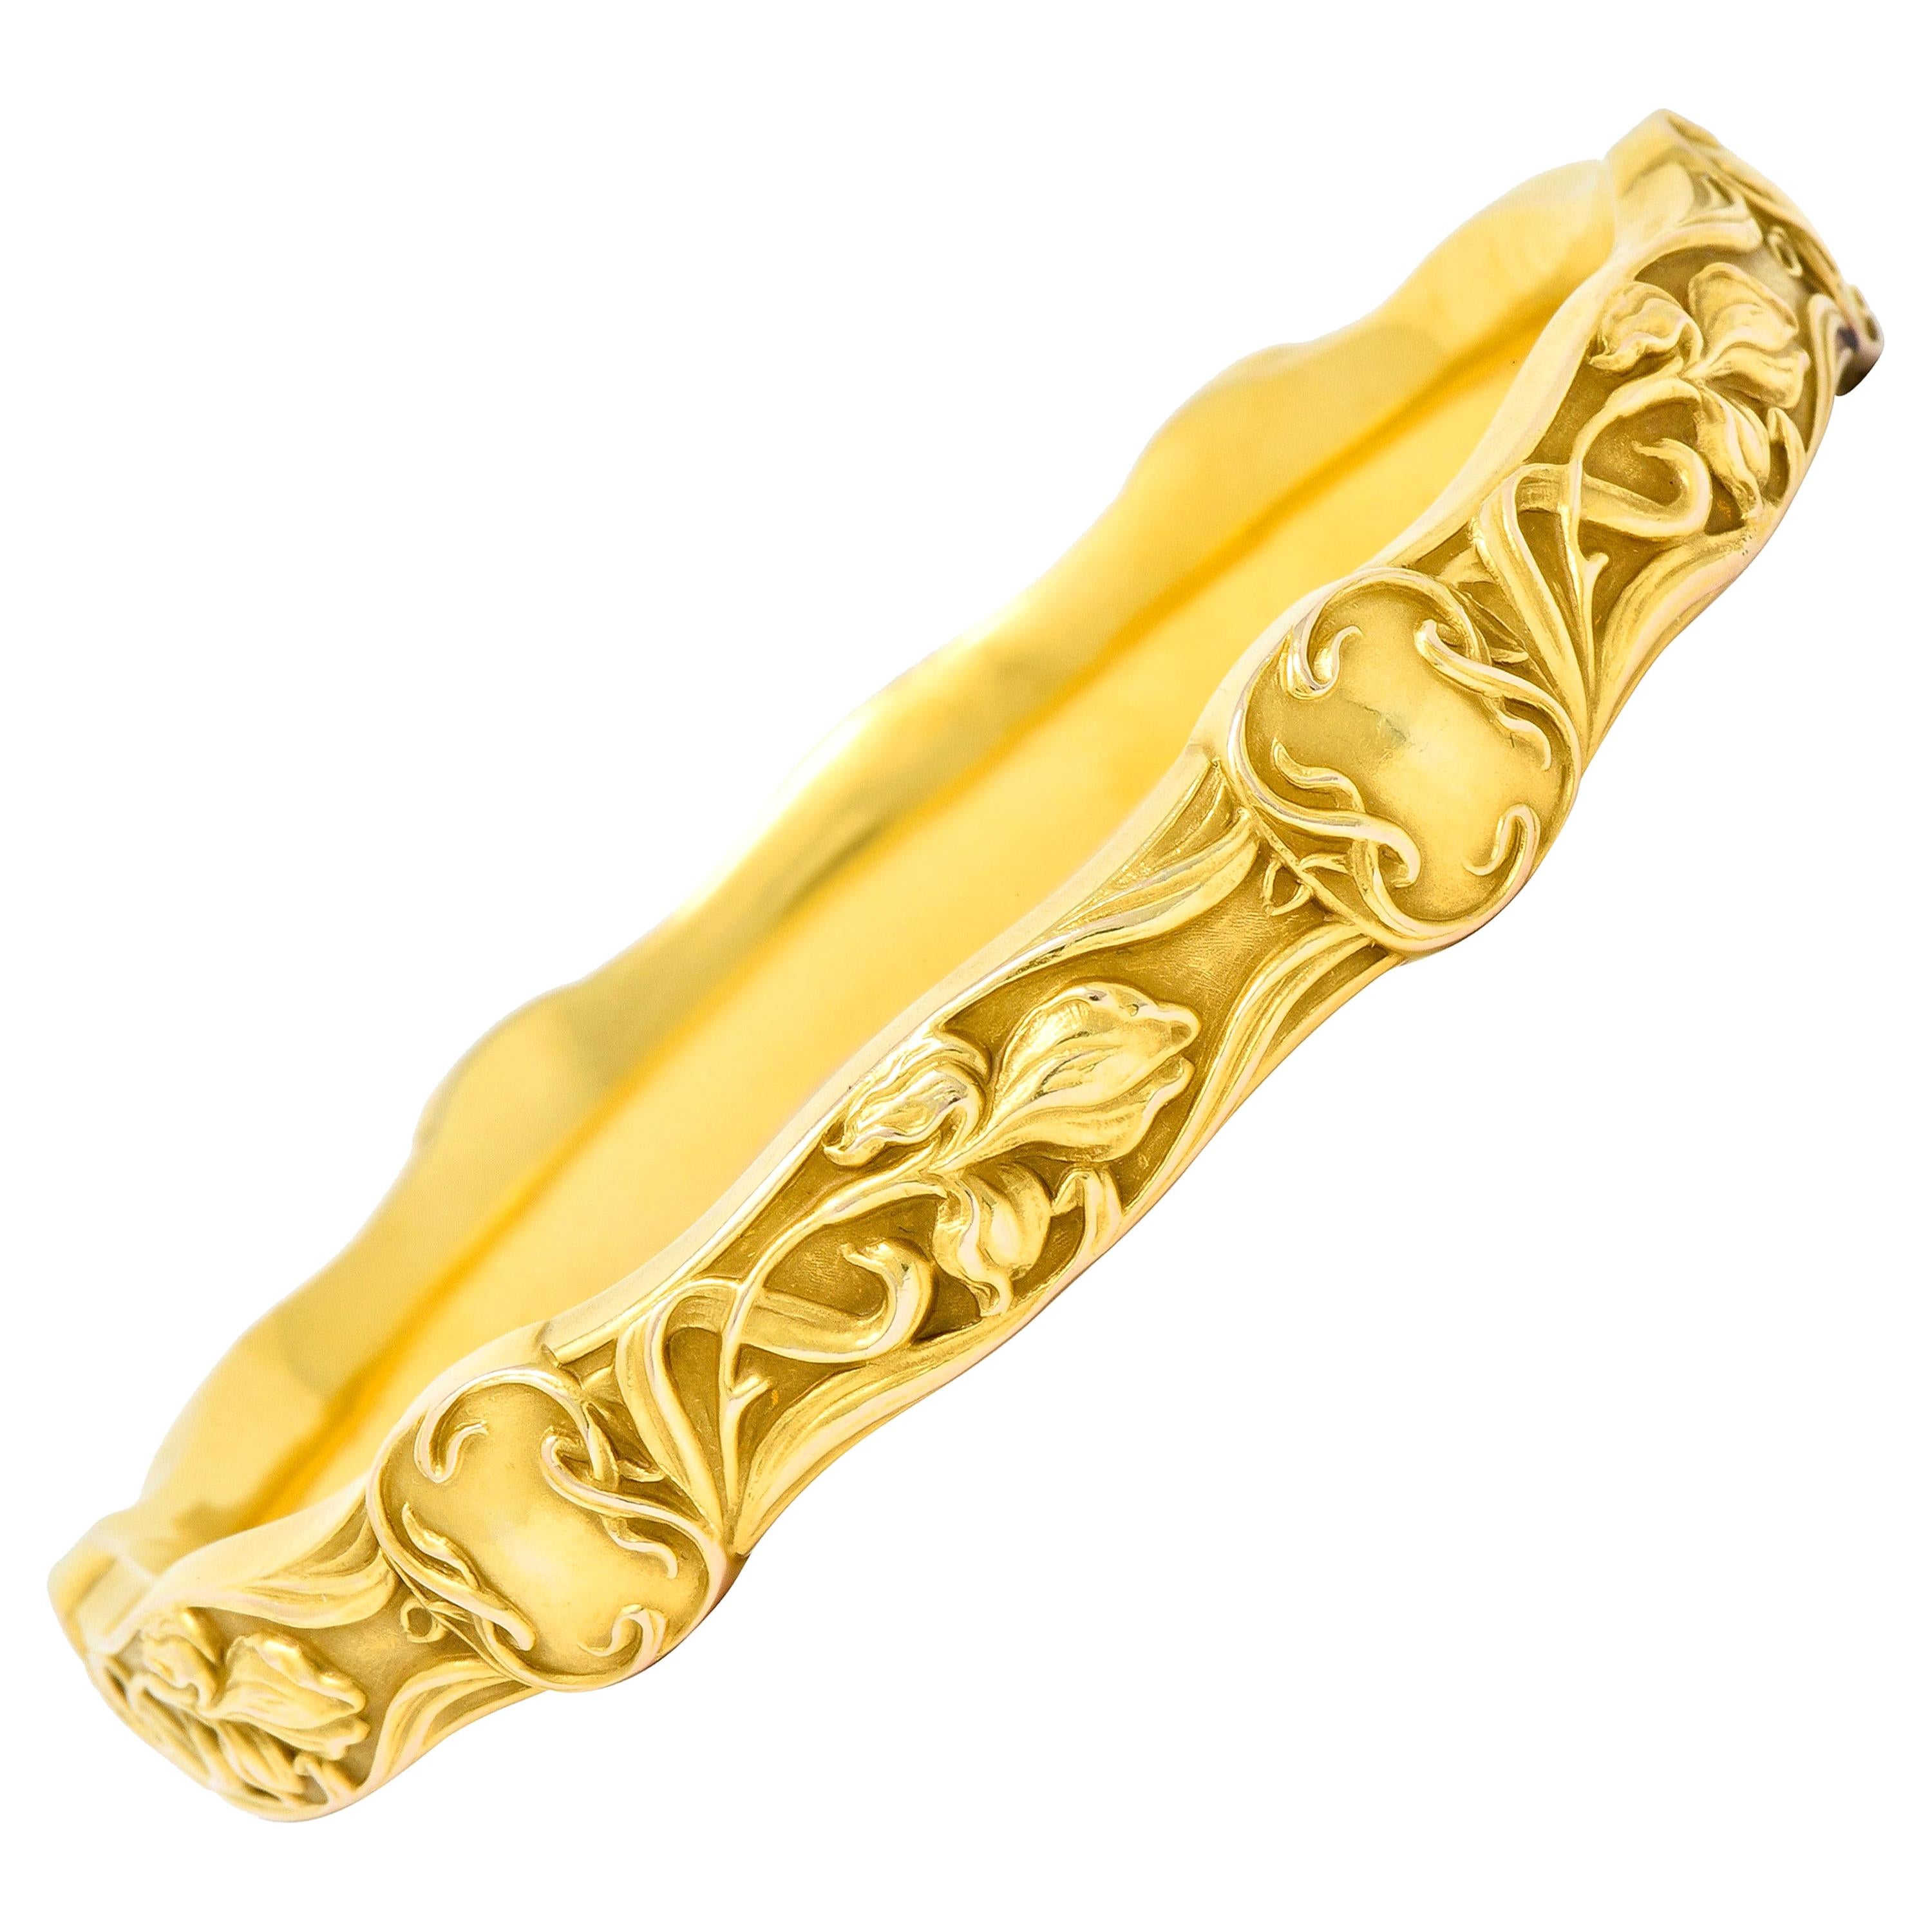 Riker Brothers Art Nouveau 14 Karat Gold Iris Flower Bangle Bracelet